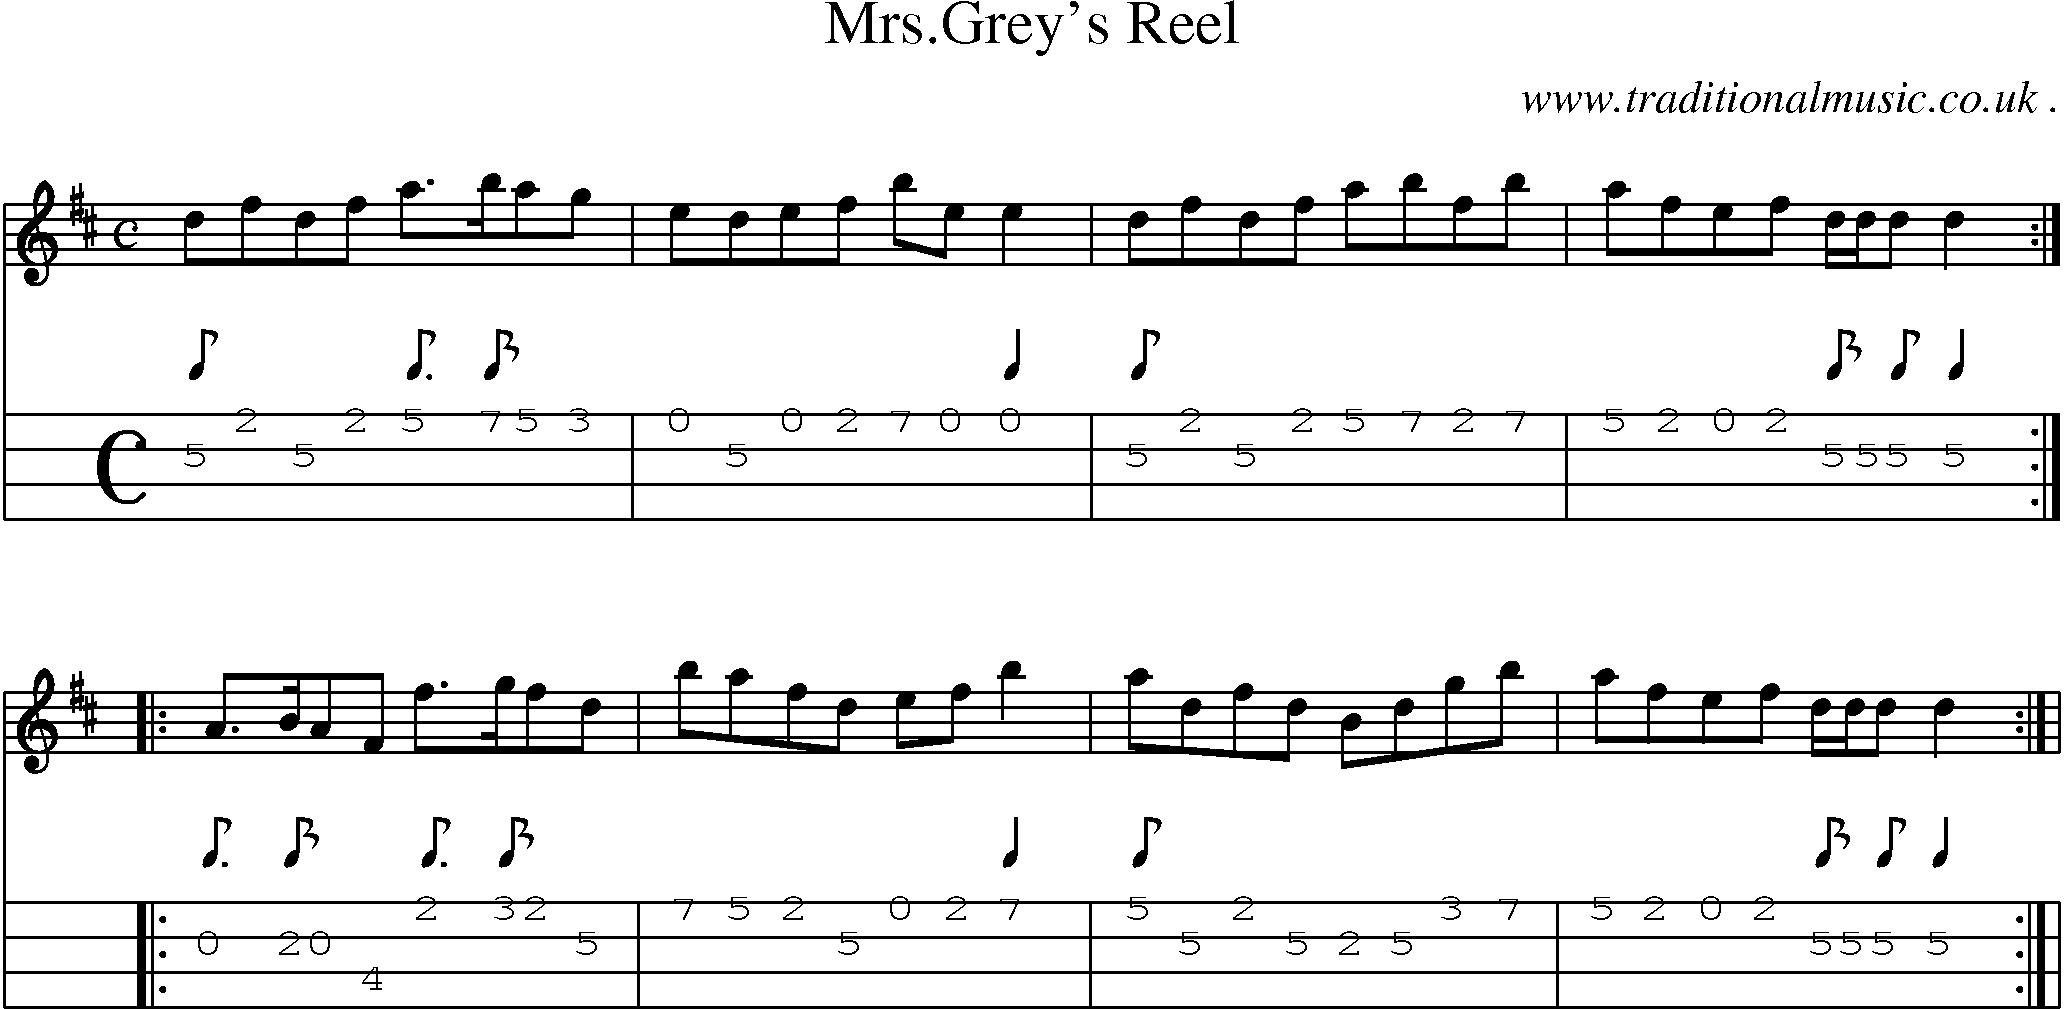 Sheet-Music and Mandolin Tabs for Mrsgreys Reel